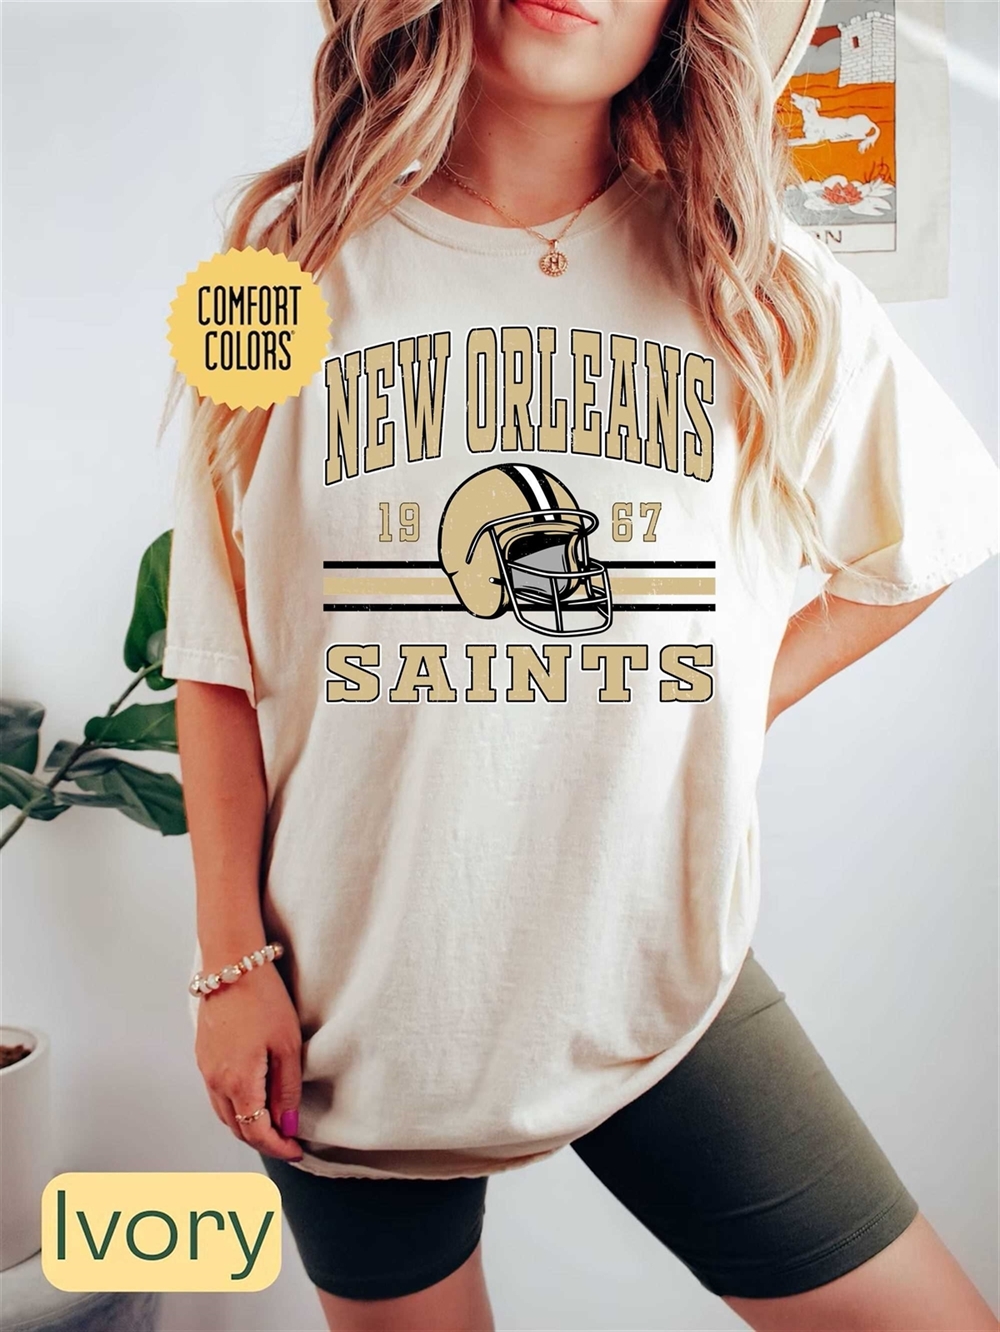 New Orleans Football Comfort Colors Shirt Trendy Vintage Retro 80s Style Football Tshirt